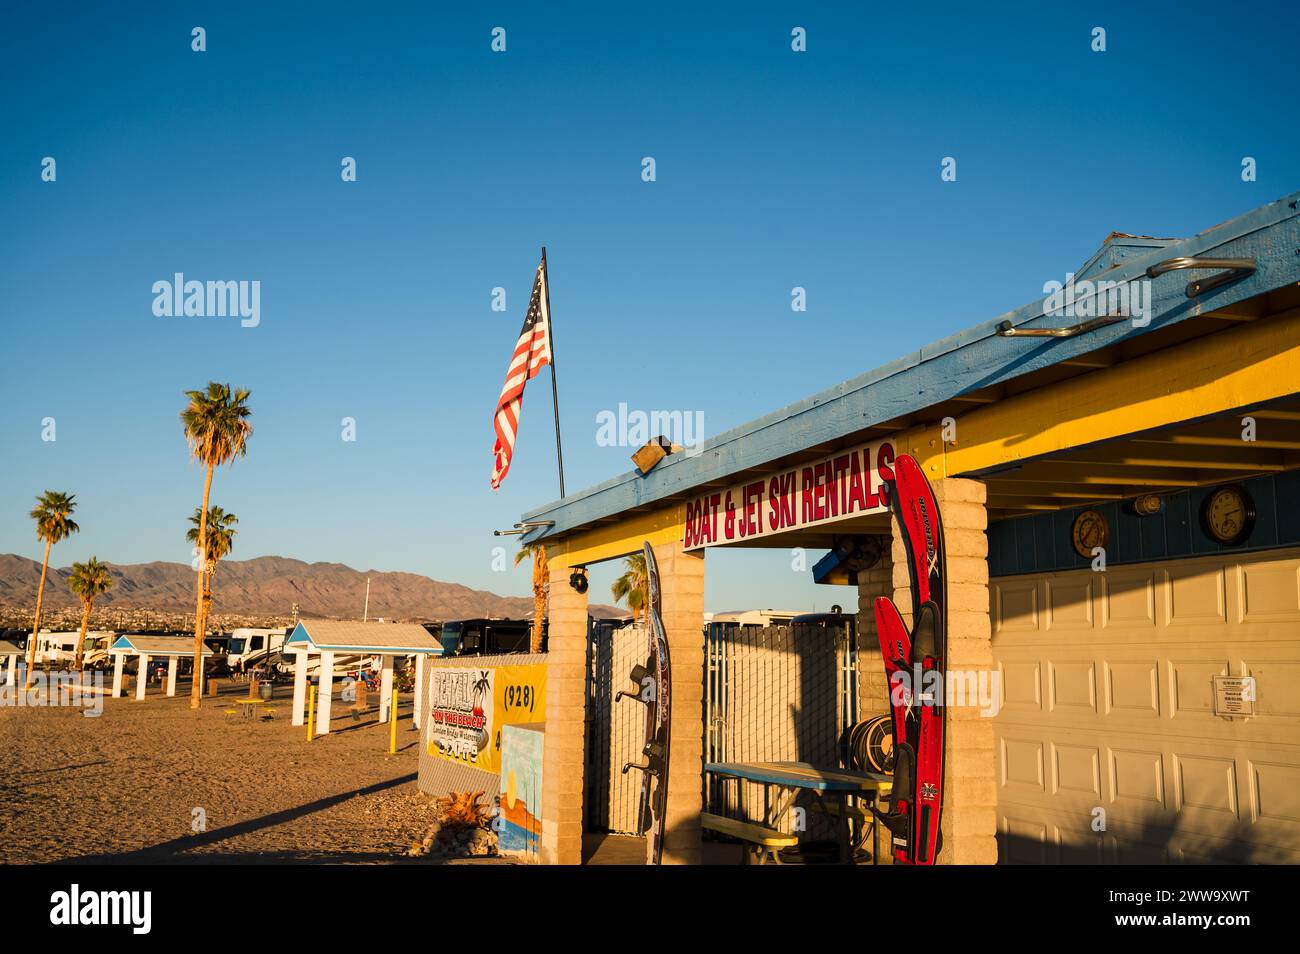 Jet ski and boat rental shop at a campground on the shore of Lake Havasu Arizona, USA. Stock Photo